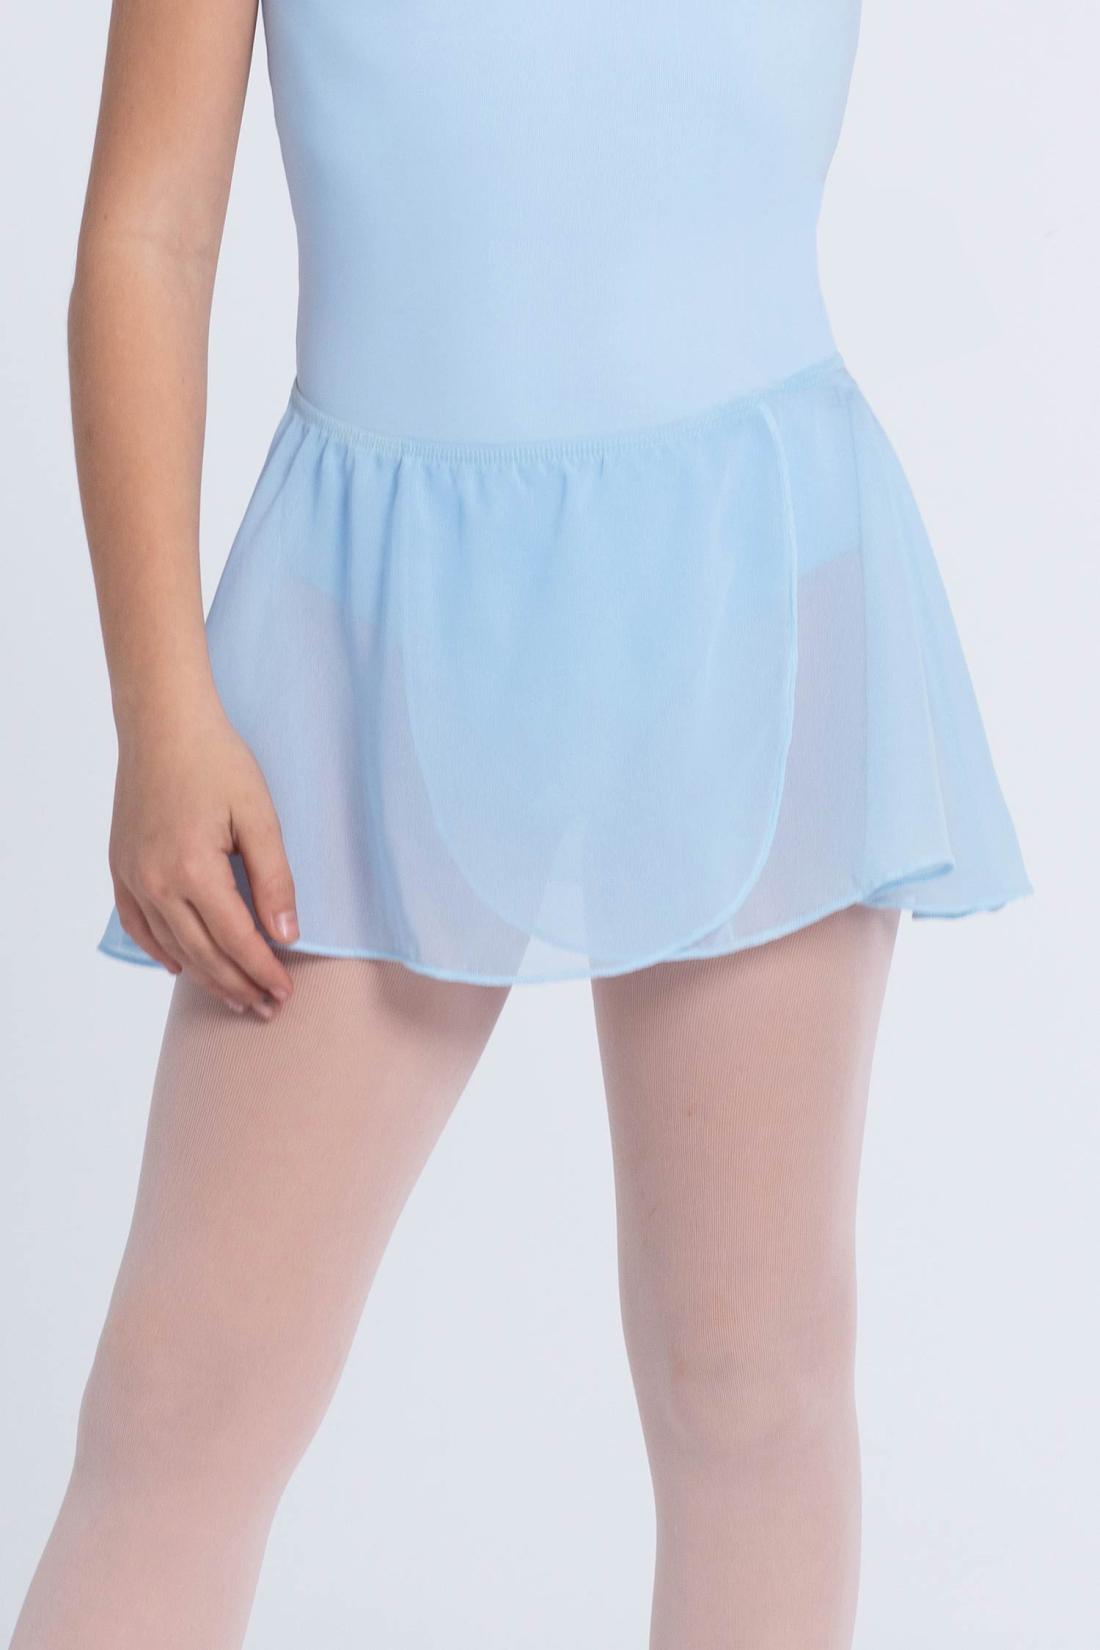 Intermezzo Wrap Ballet skirt with elastic waist